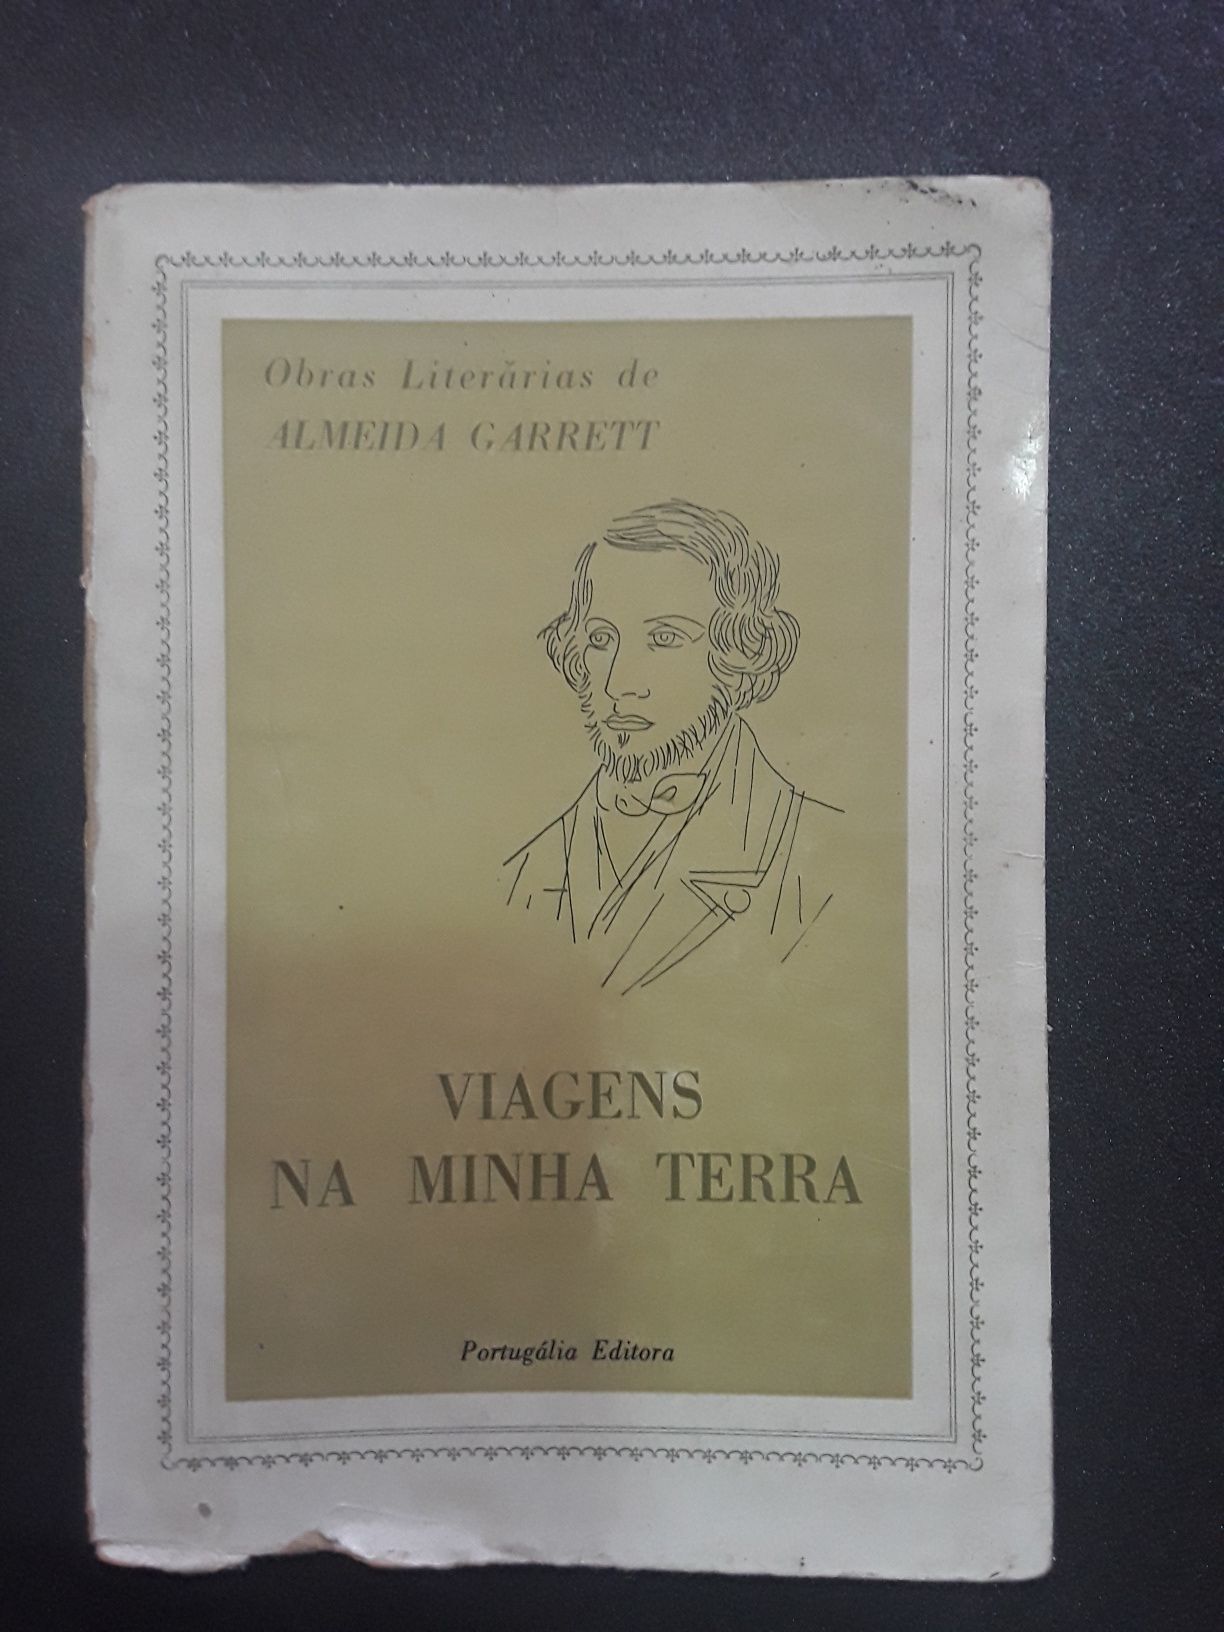 Almeida Garret